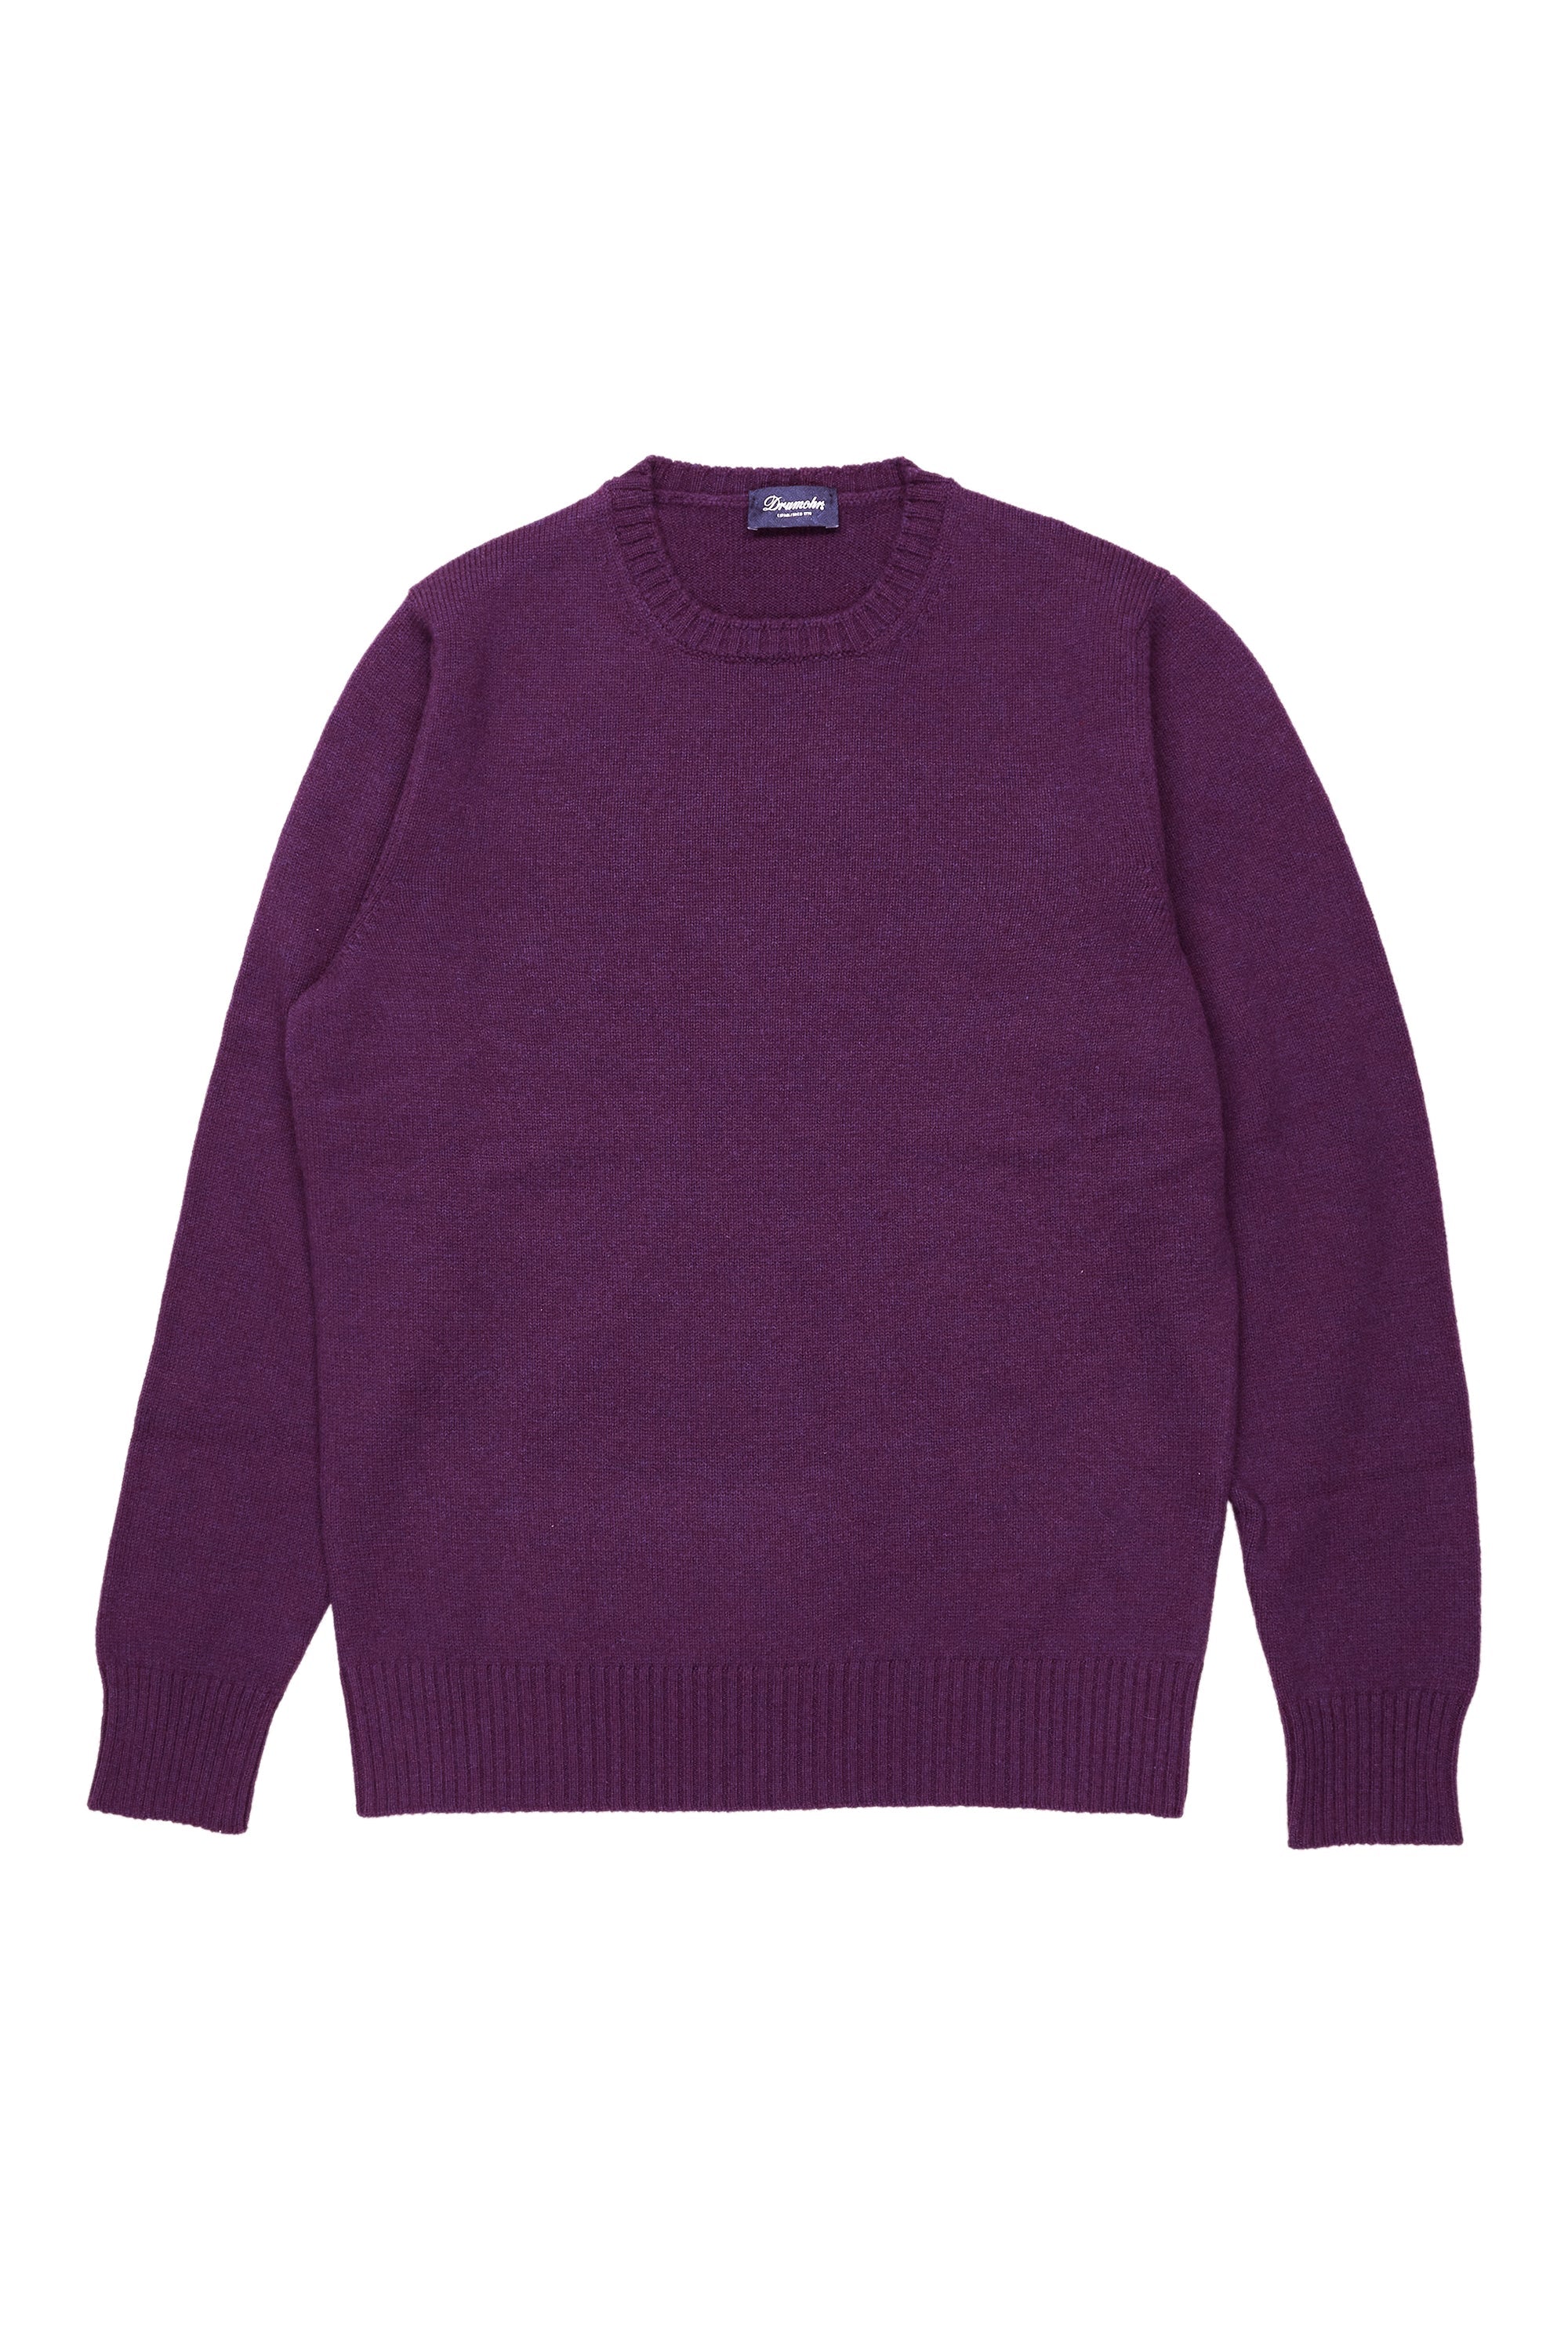 Drumohr Purple LS Solid Cashmere Crewneck Sweater